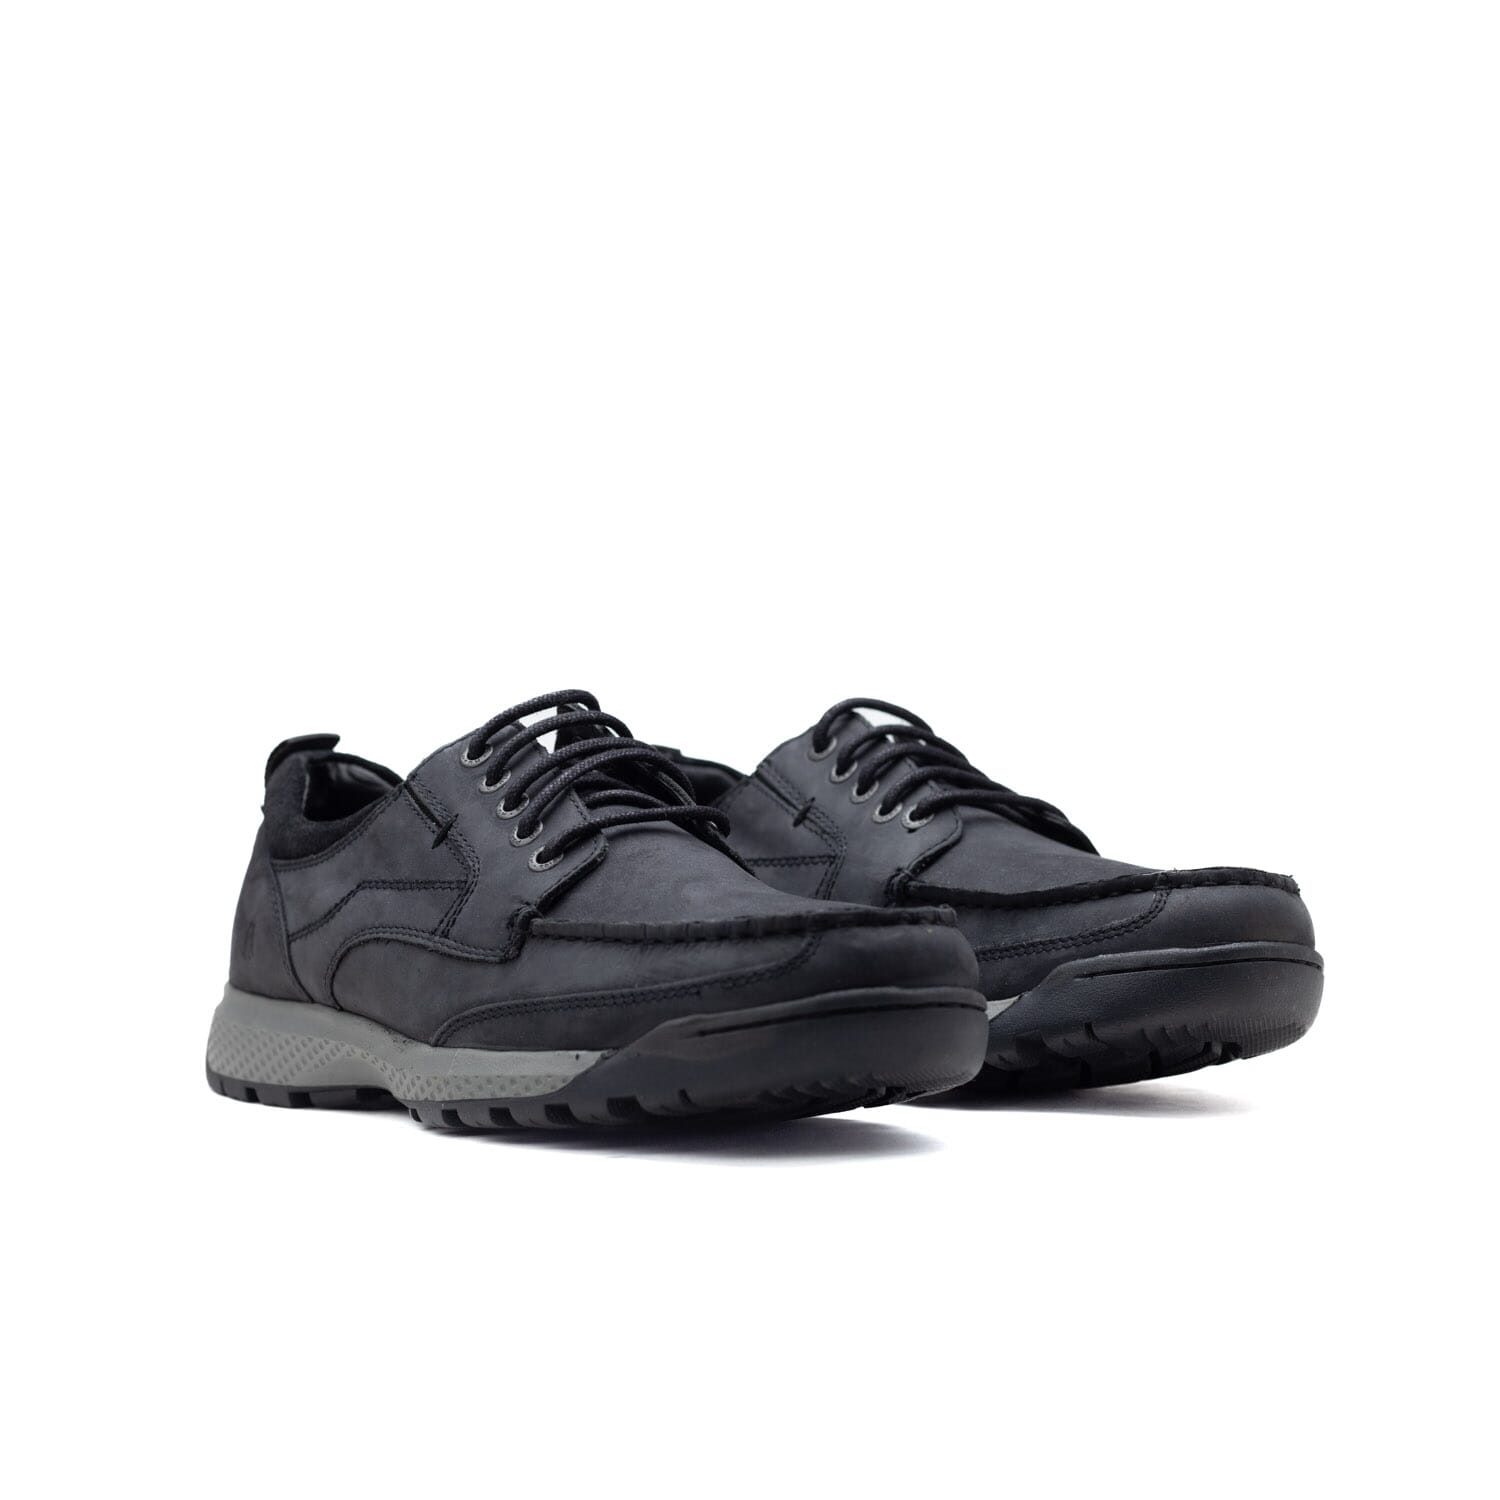 HUSH PUPPIES – PIMBA – BLACK – Perocili Shoes